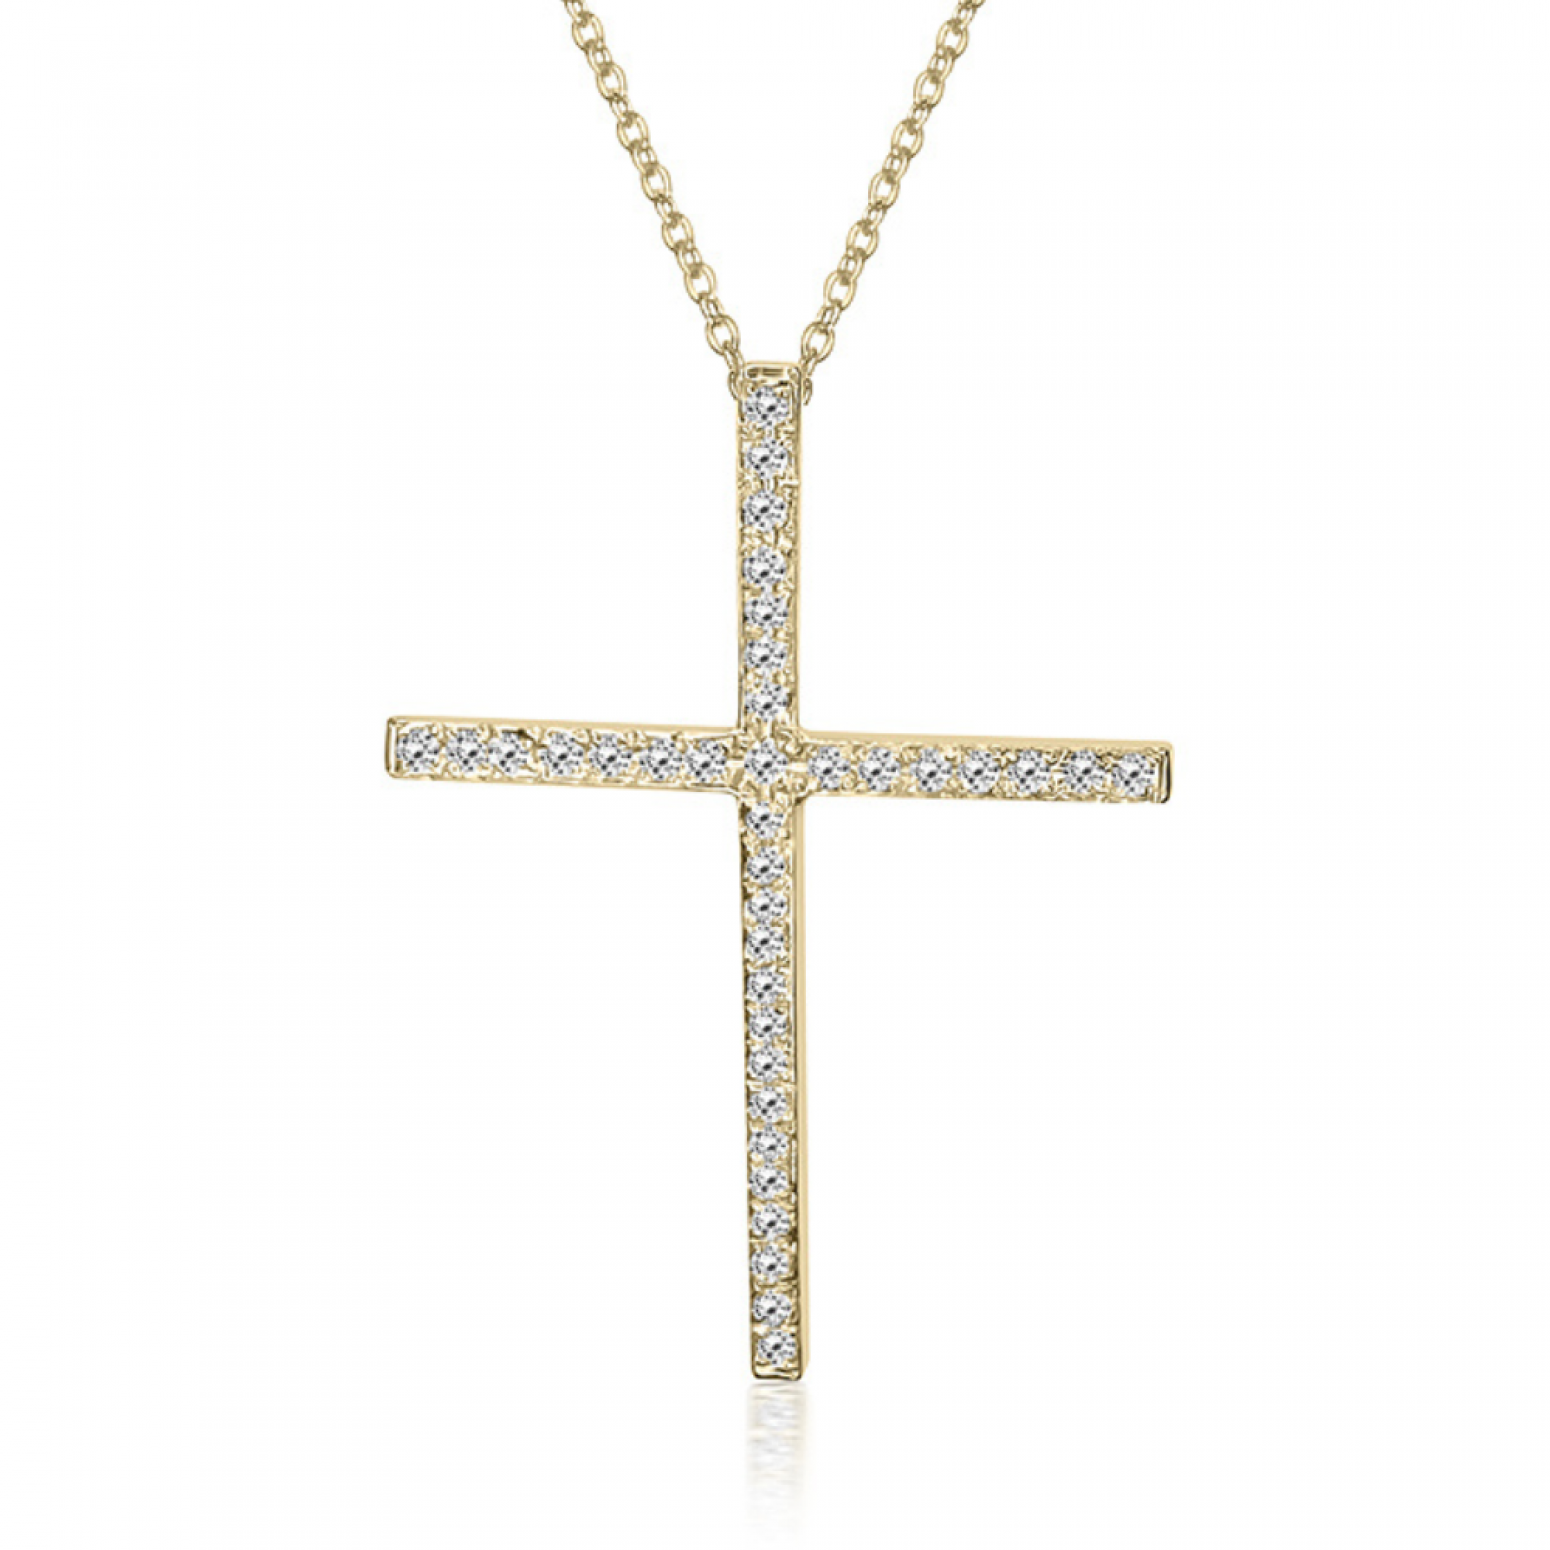 Baptism cross with chain K18 gold with diamonds 0.11ct, VS2, H ko5881 CROSSES Κοσμηματα - chrilia.gr